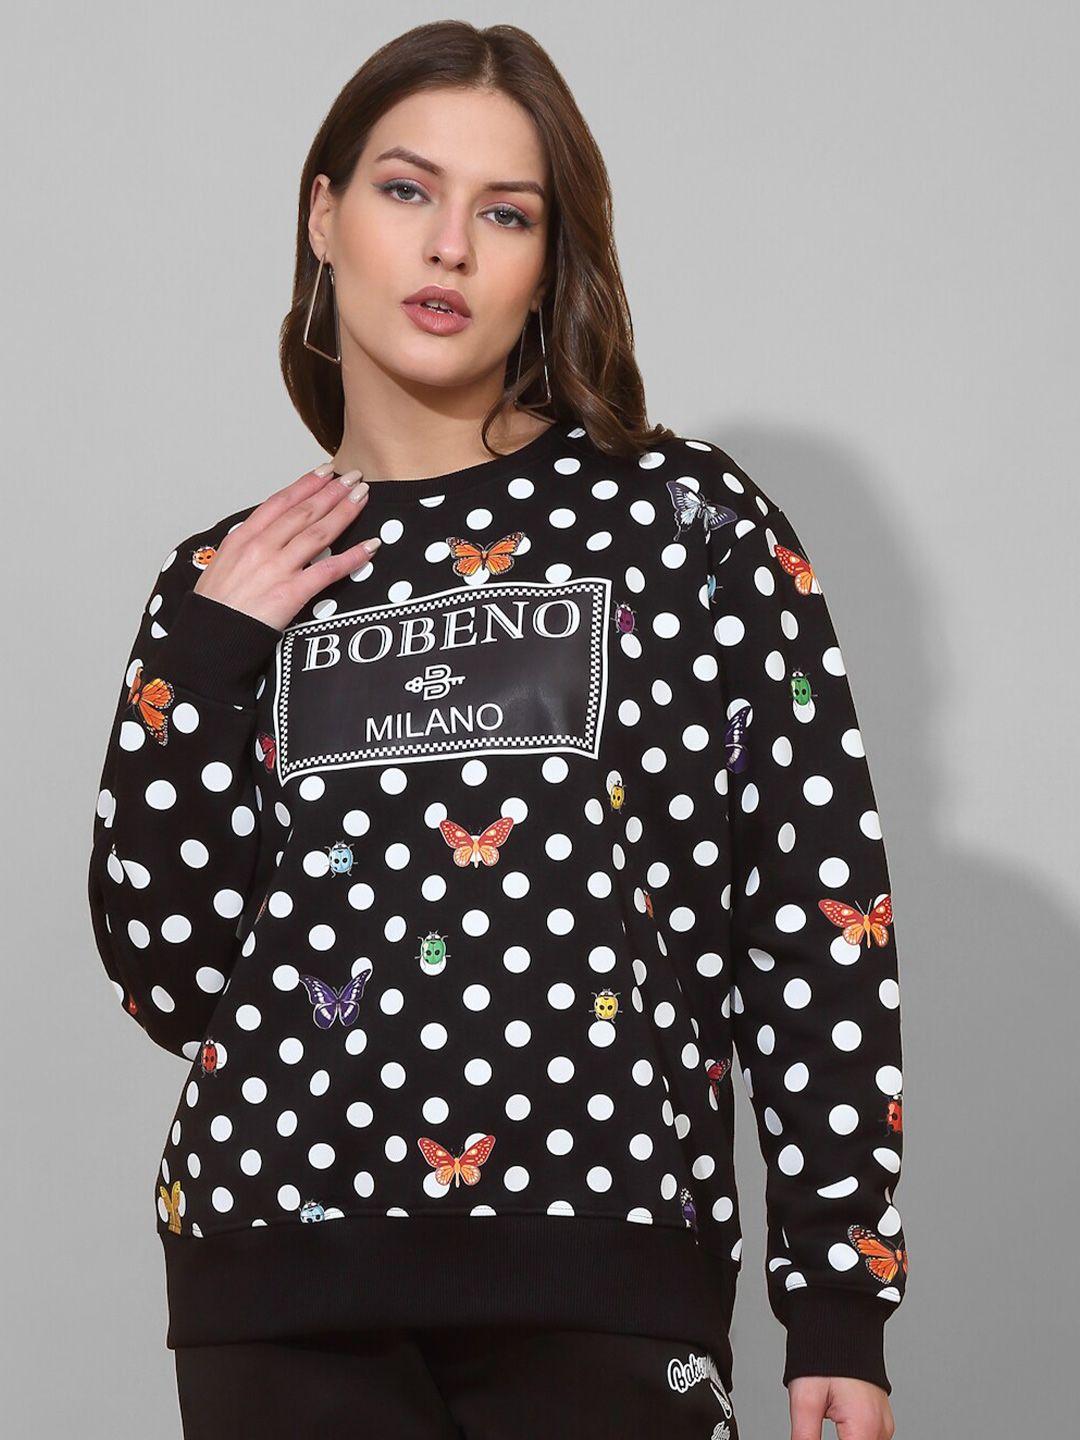 bobeno milano polka dots printed fleece pullover sweatshirt